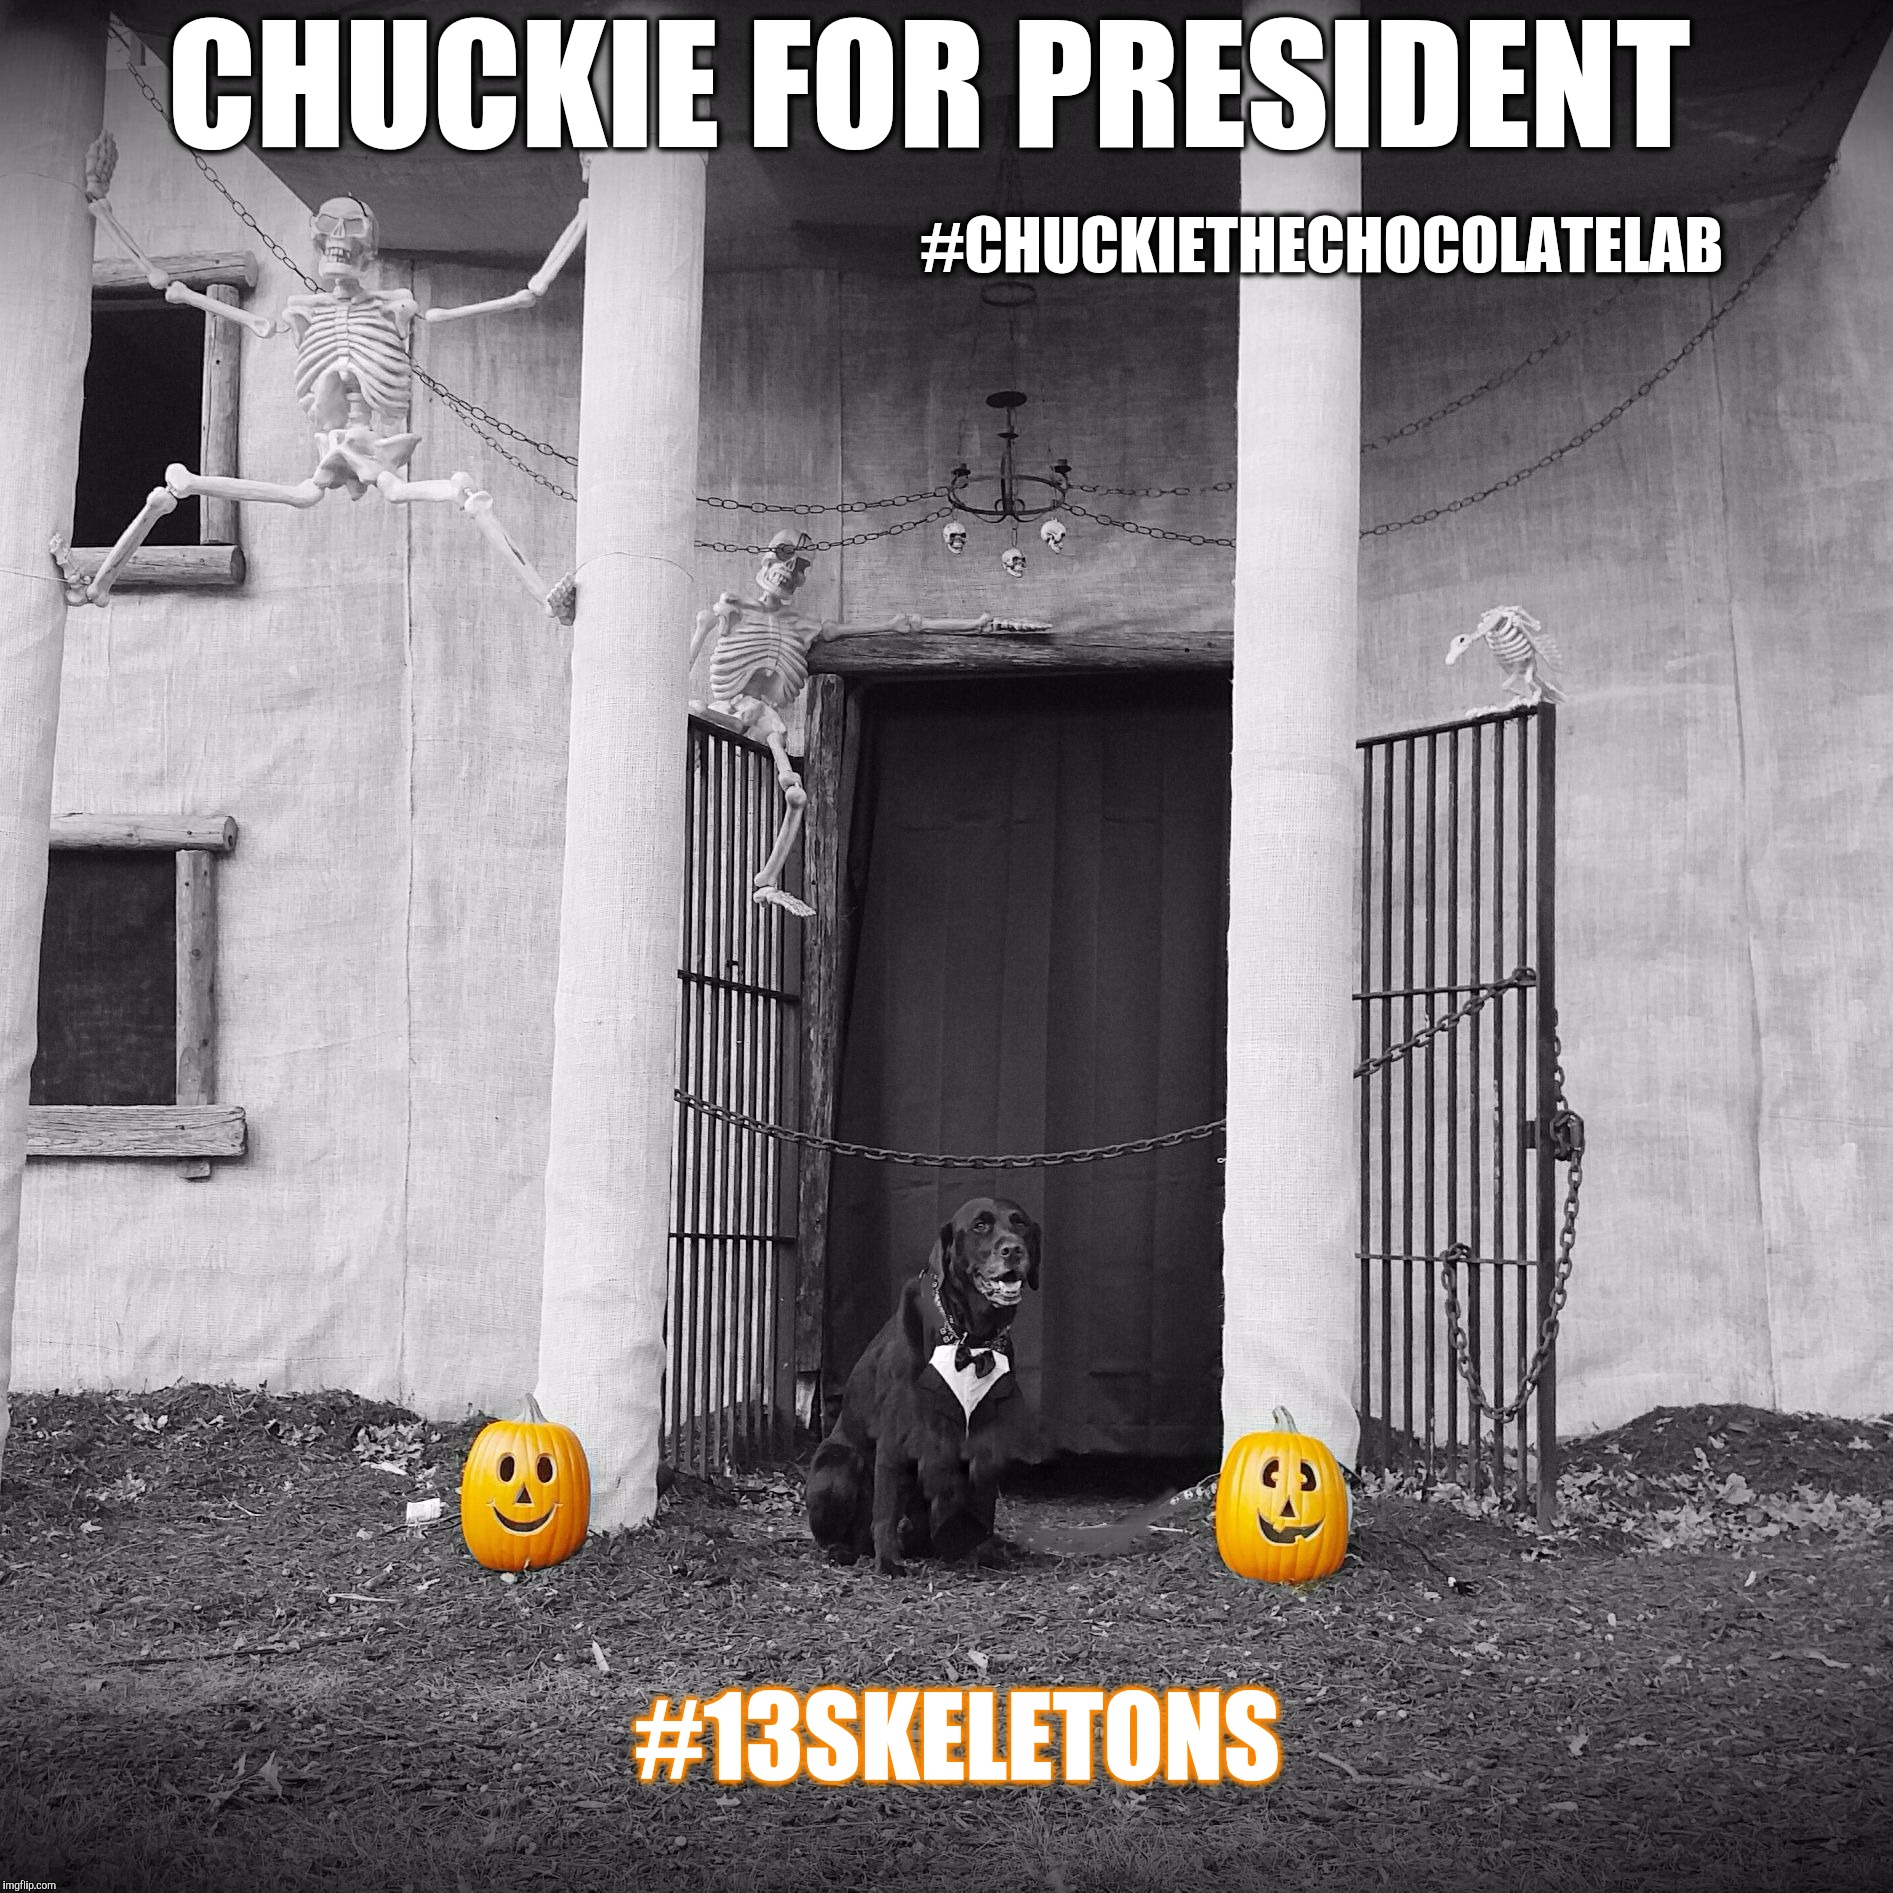 Chuckie for President and 13 Skeletons  | CHUCKIE FOR PRESIDENT; #CHUCKIETHECHOCOLATELAB; #13SKELETONS | image tagged in chuckie the chocolate lab,13 skeletons,halloween,president,funny dog memes,dog memes | made w/ Imgflip meme maker